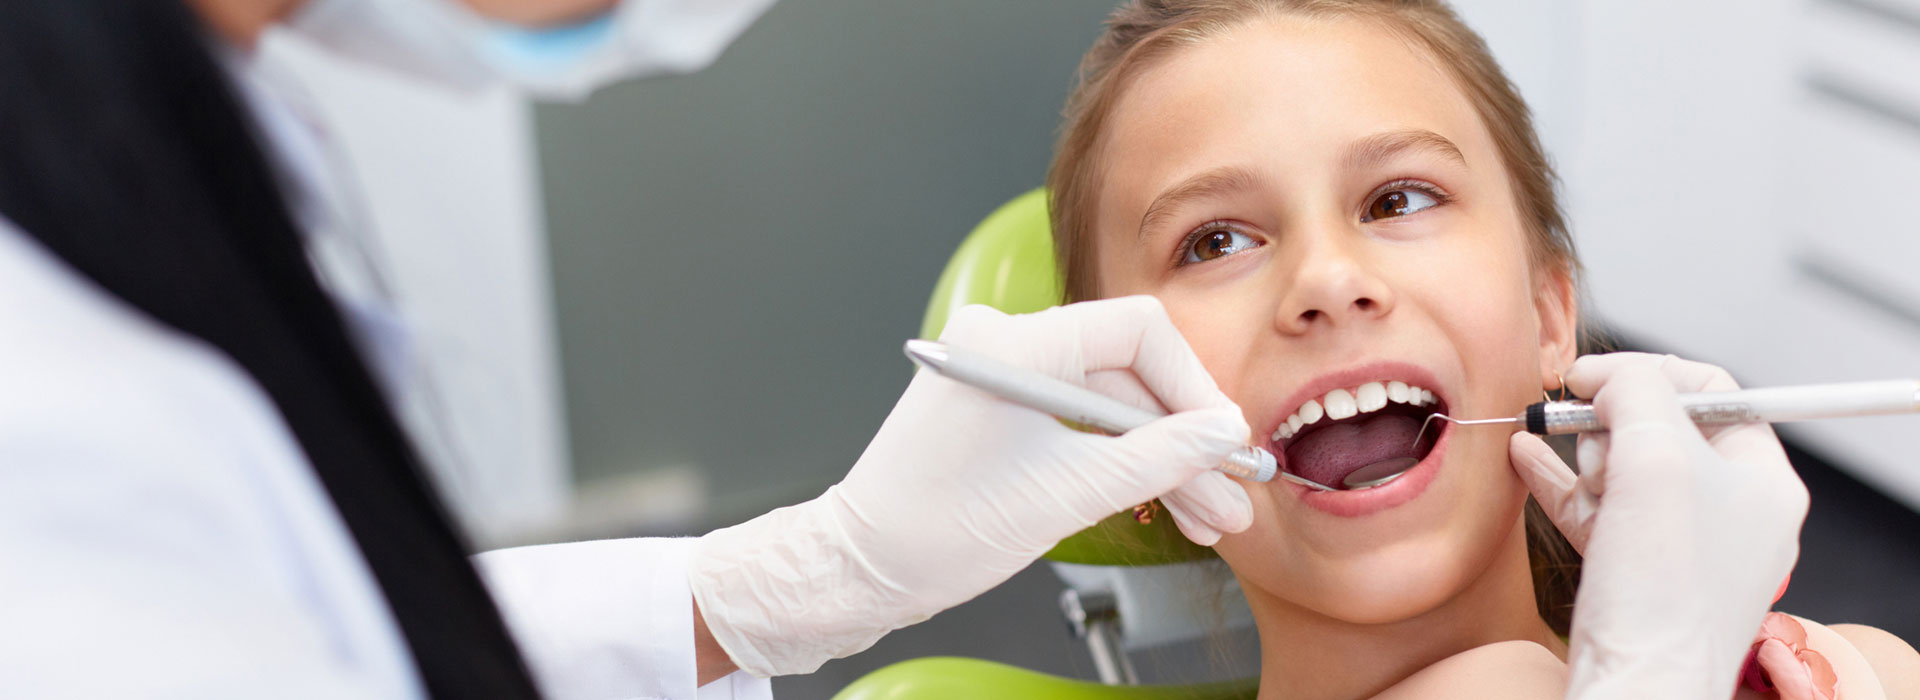 Dentist examining girls teeth